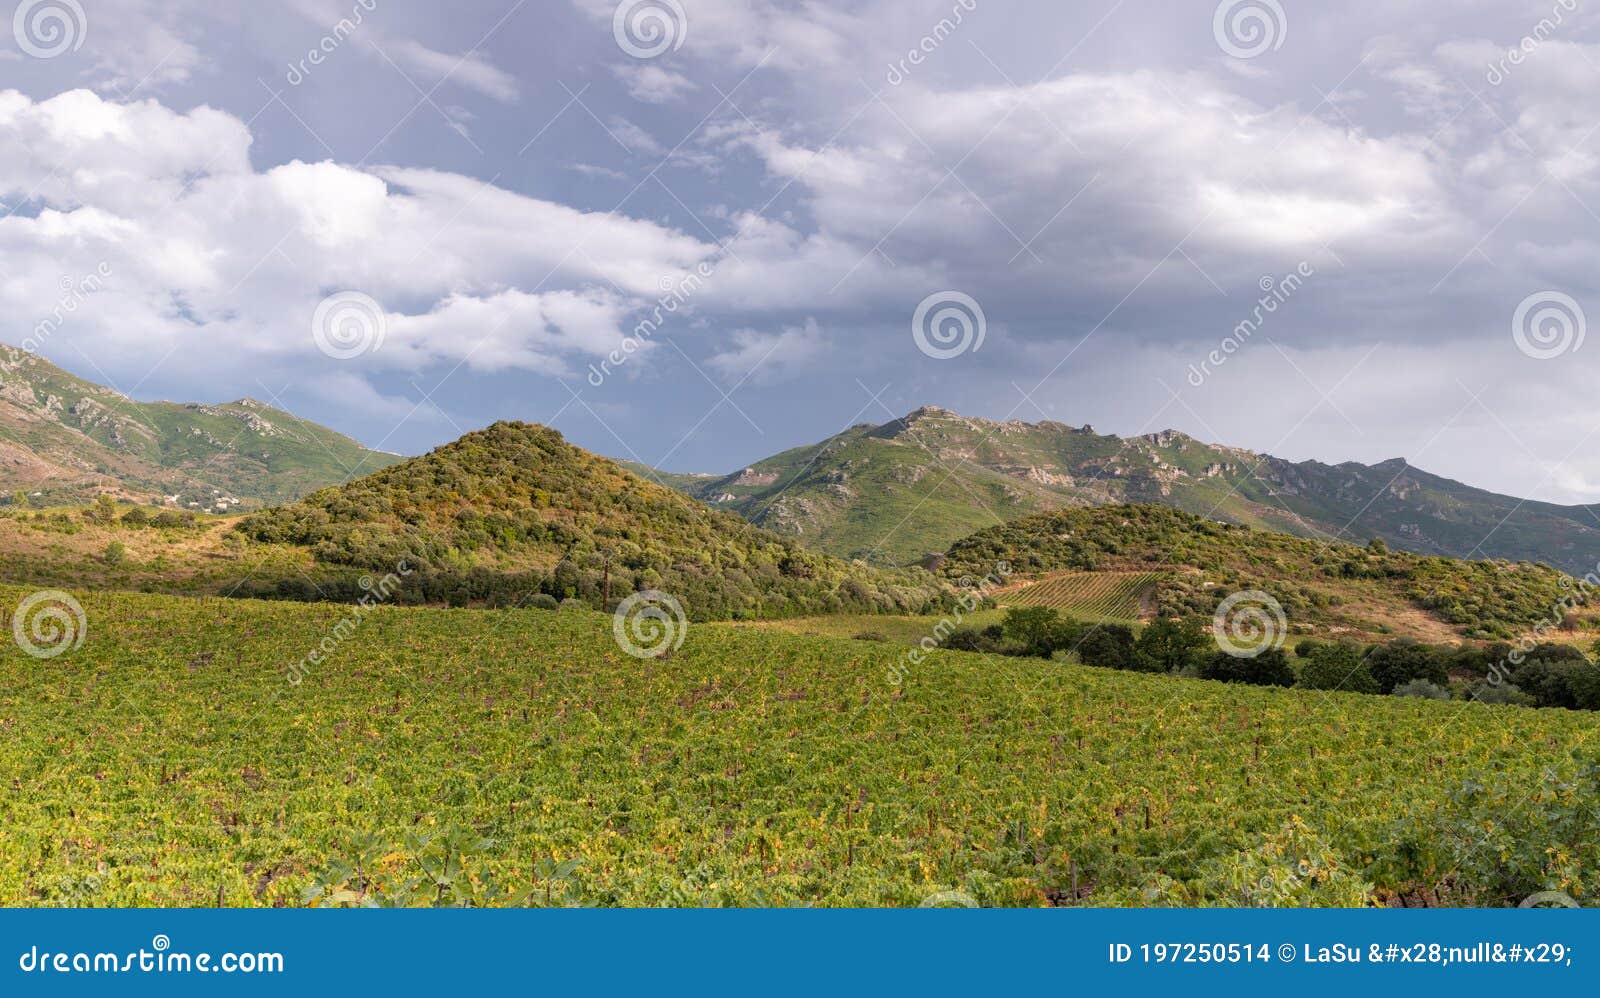 vineyards of patrimonio, wine producing area of corsica, france.